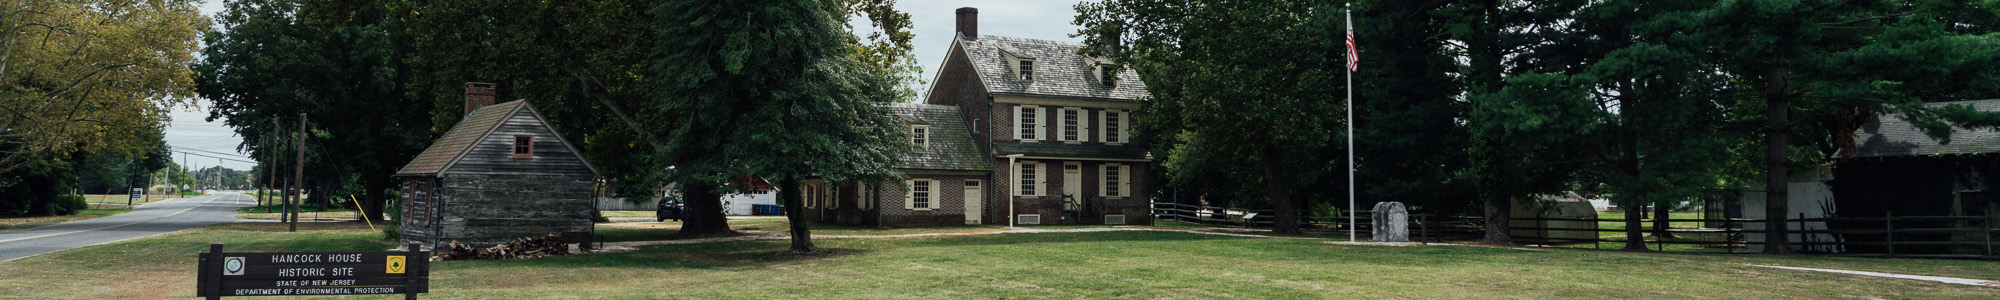 Hancock House Historic Site